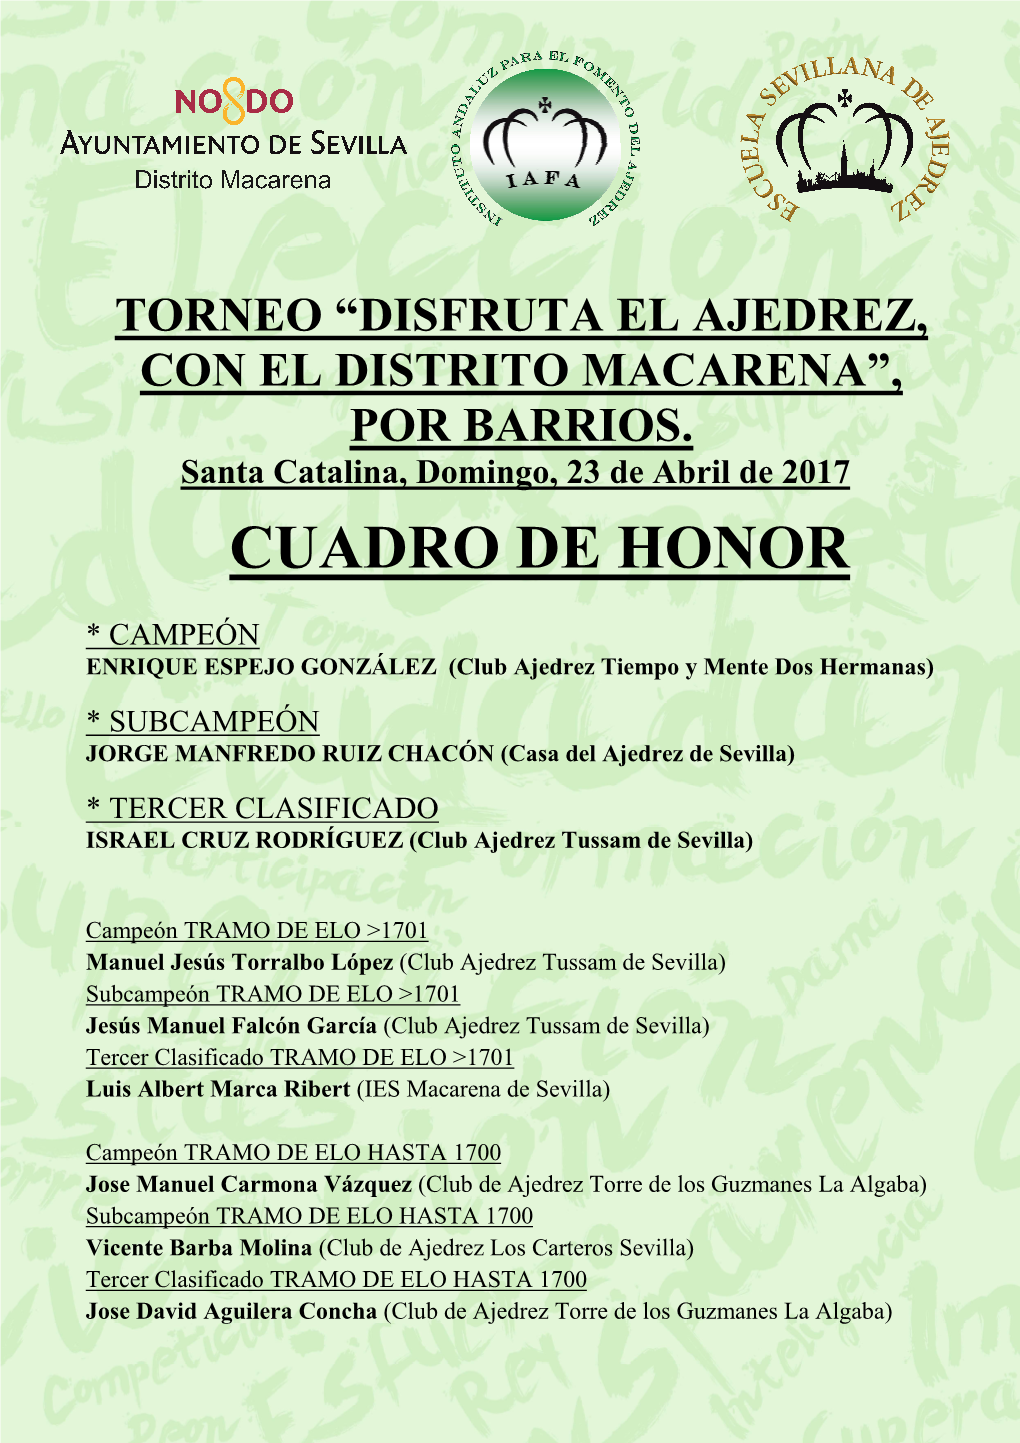 2-Cuadro De Honor Torneo Distrito Macarena 23-04-2017